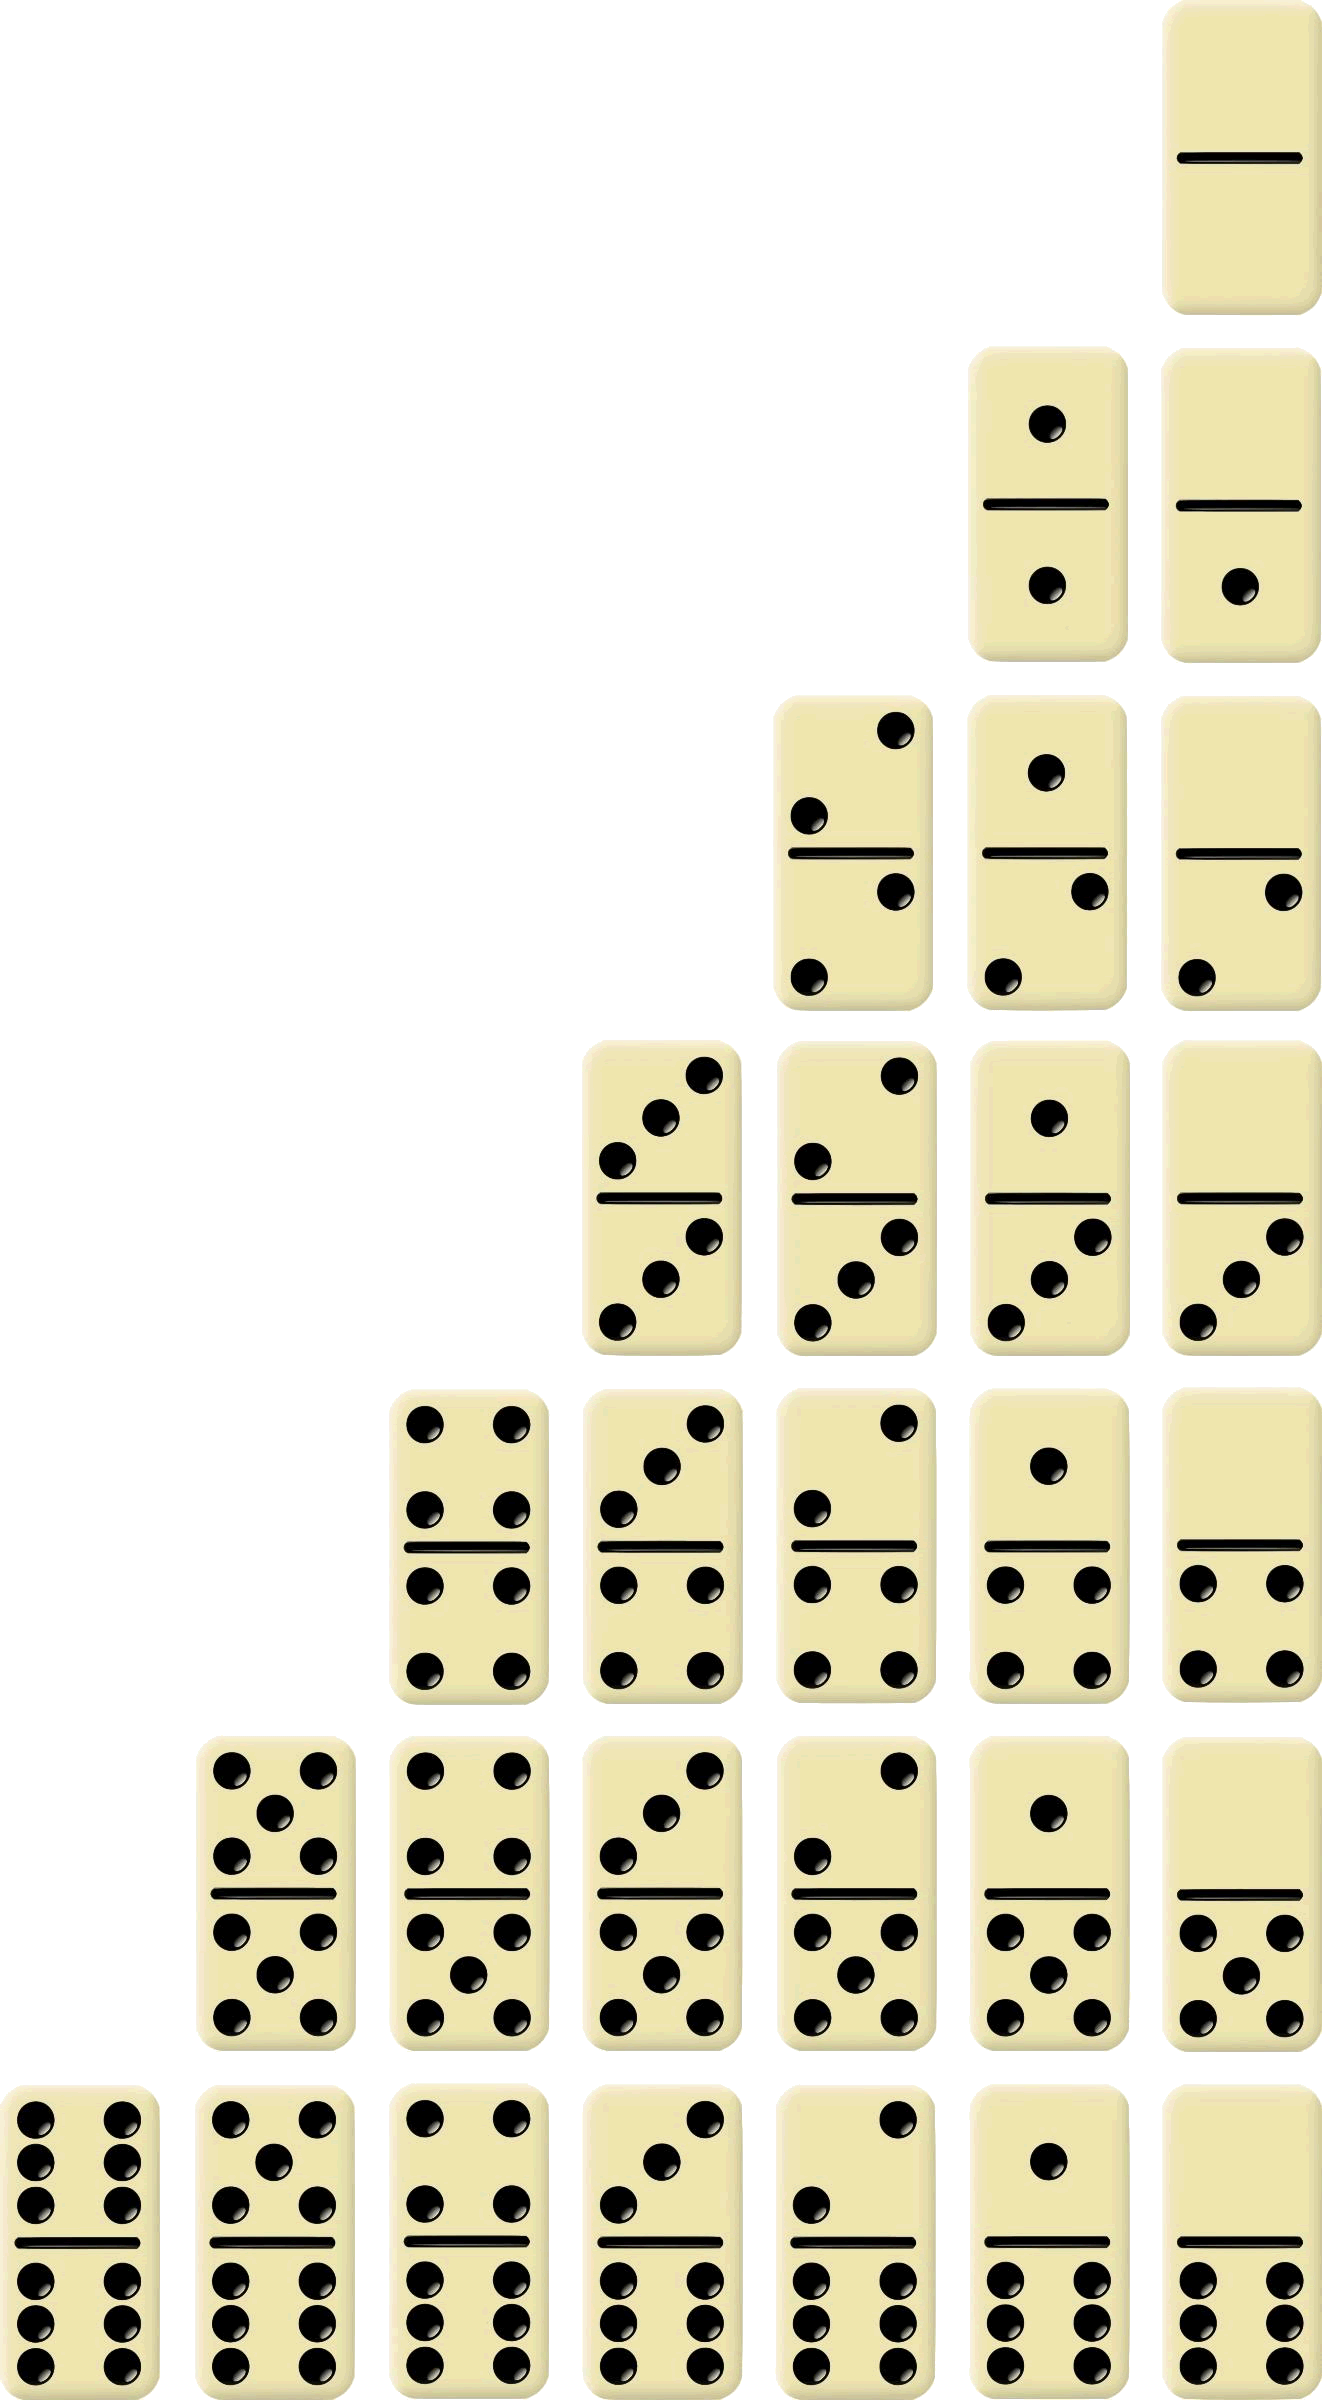 Domino clipart blank domino, Domino blank domino Transparent FREE for